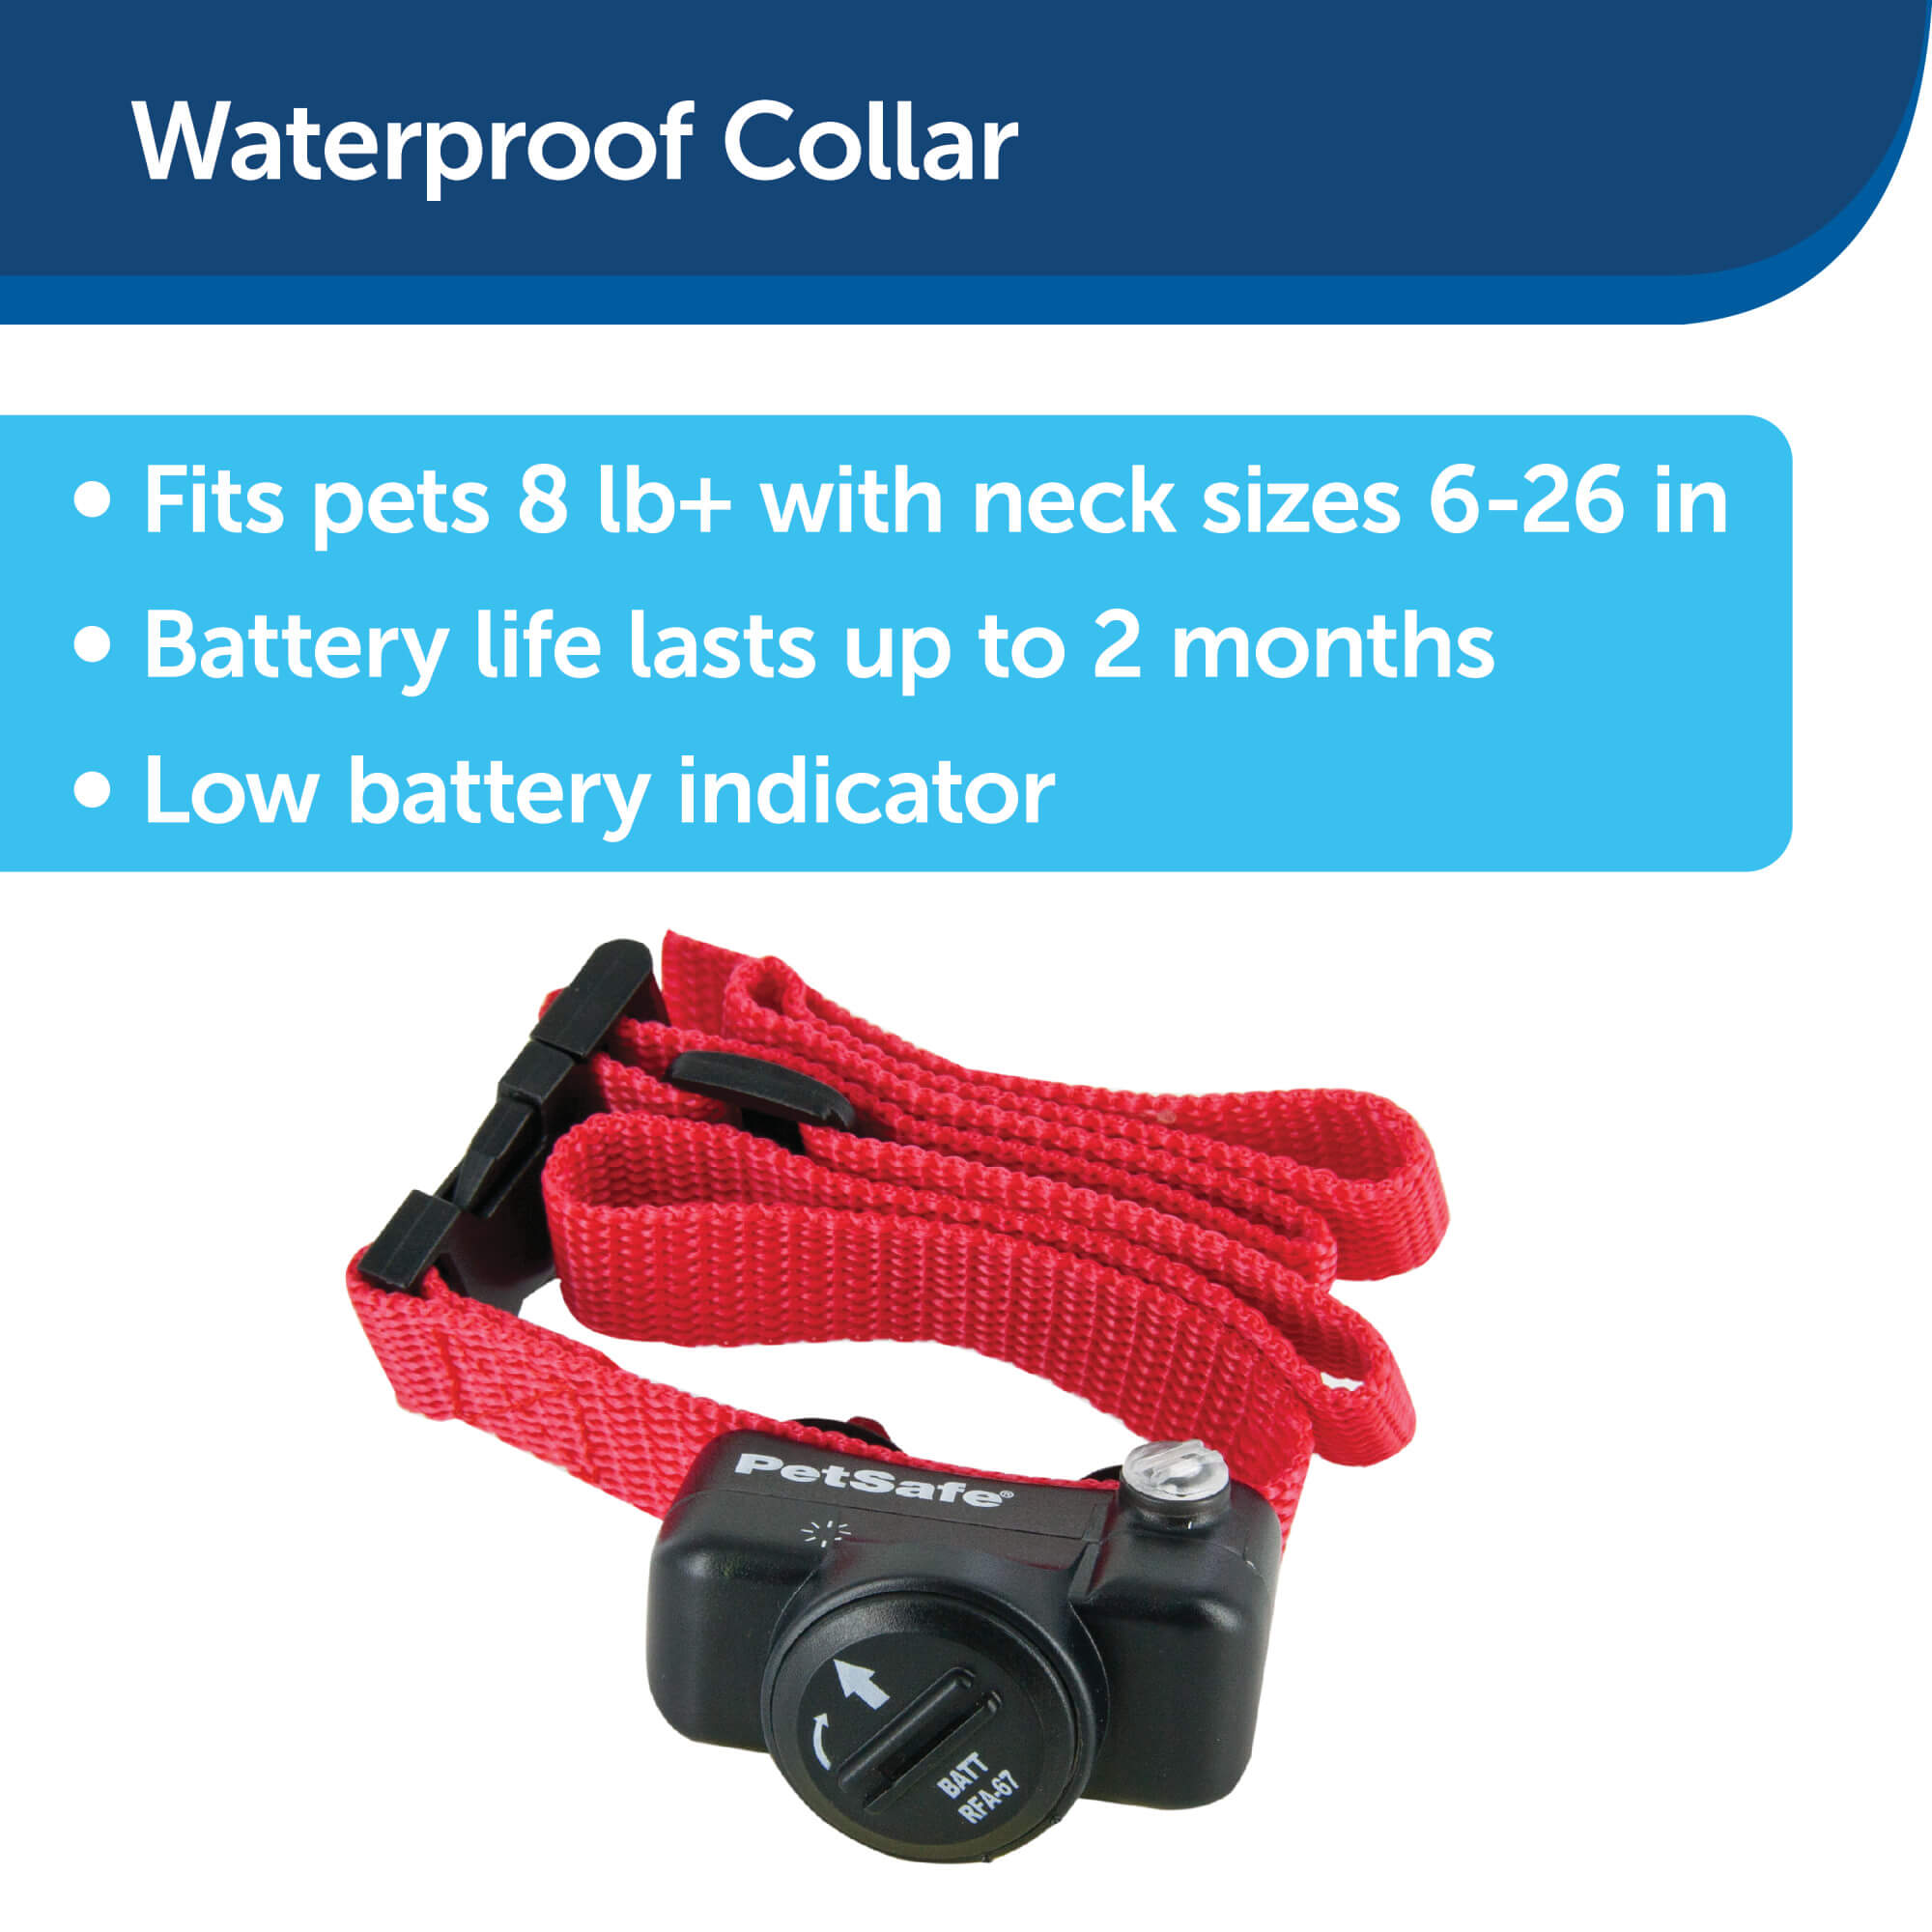 PetSafe Waterproof collar